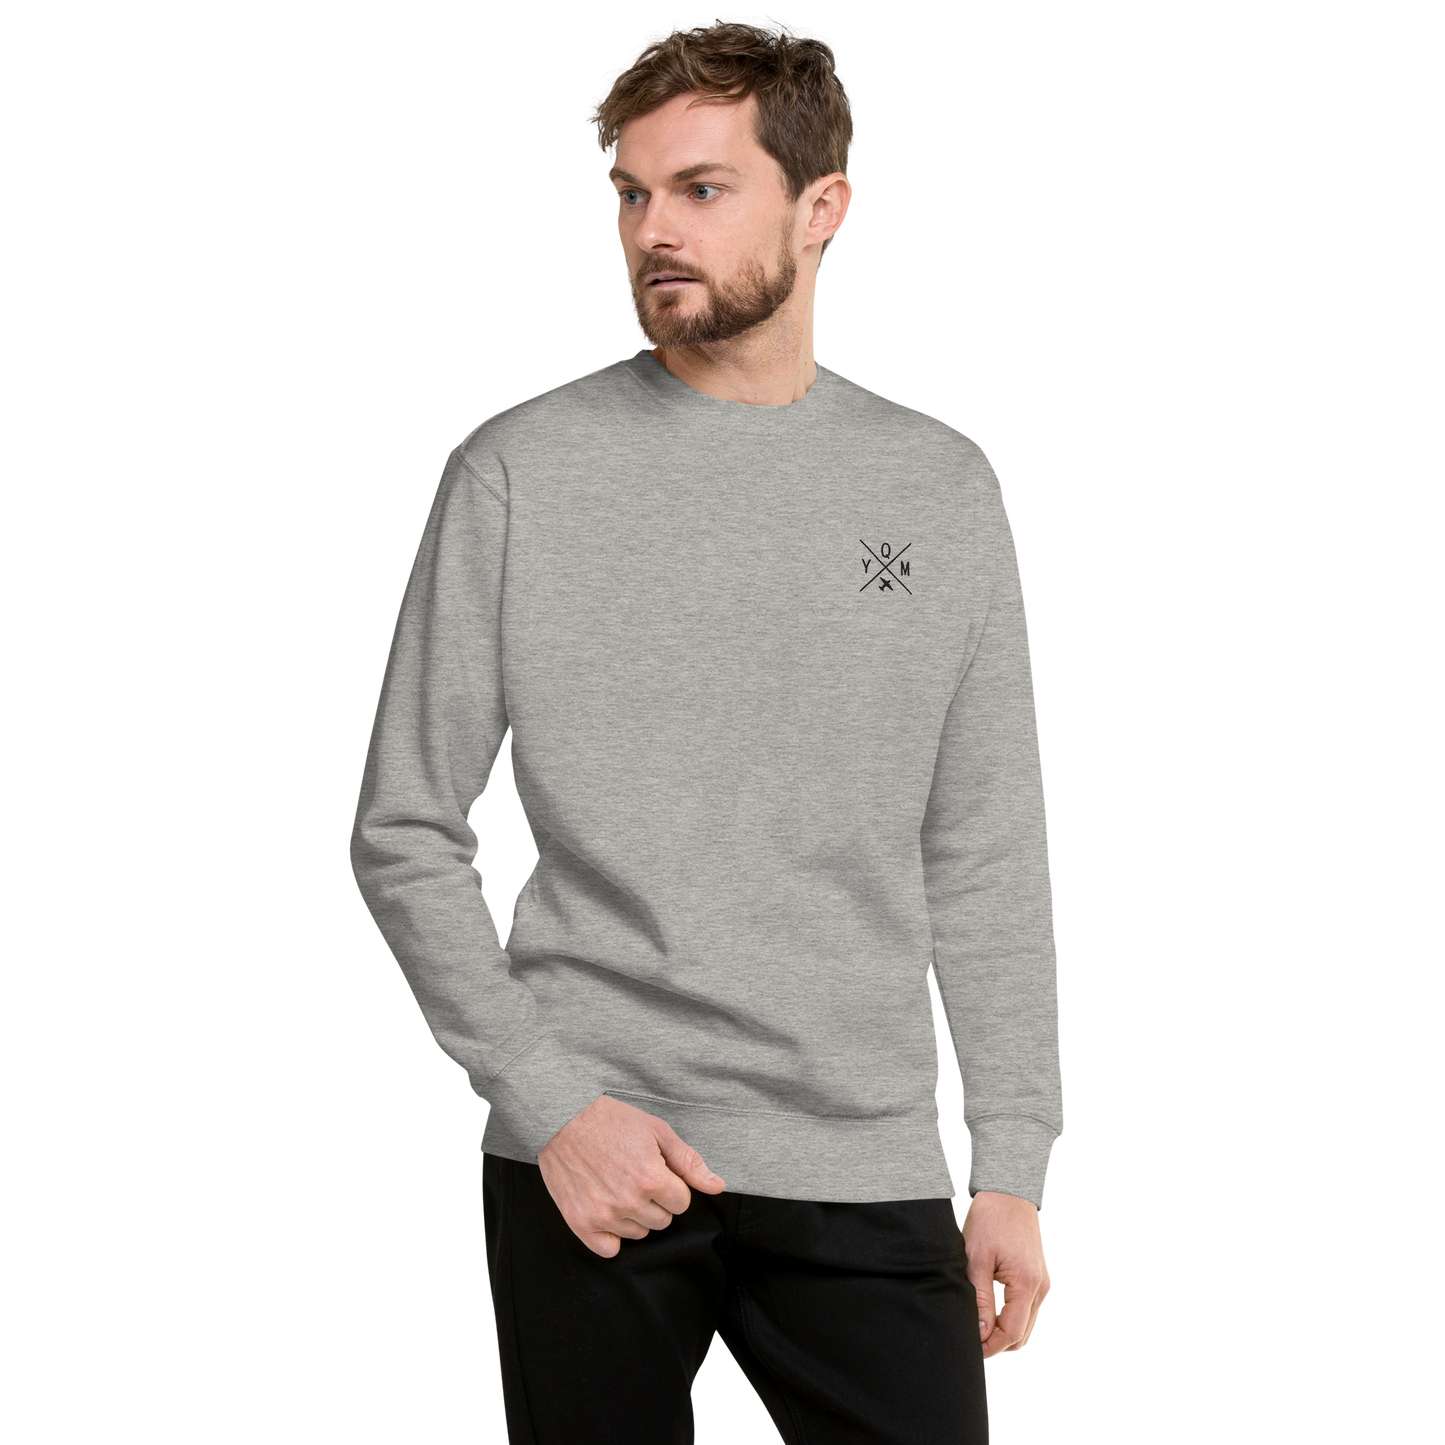 YHM Designs - YQM Moncton Premium Sweatshirt - Crossed-X Design with Airport Code and Vintage Propliner - Black Embroidery - Image 01